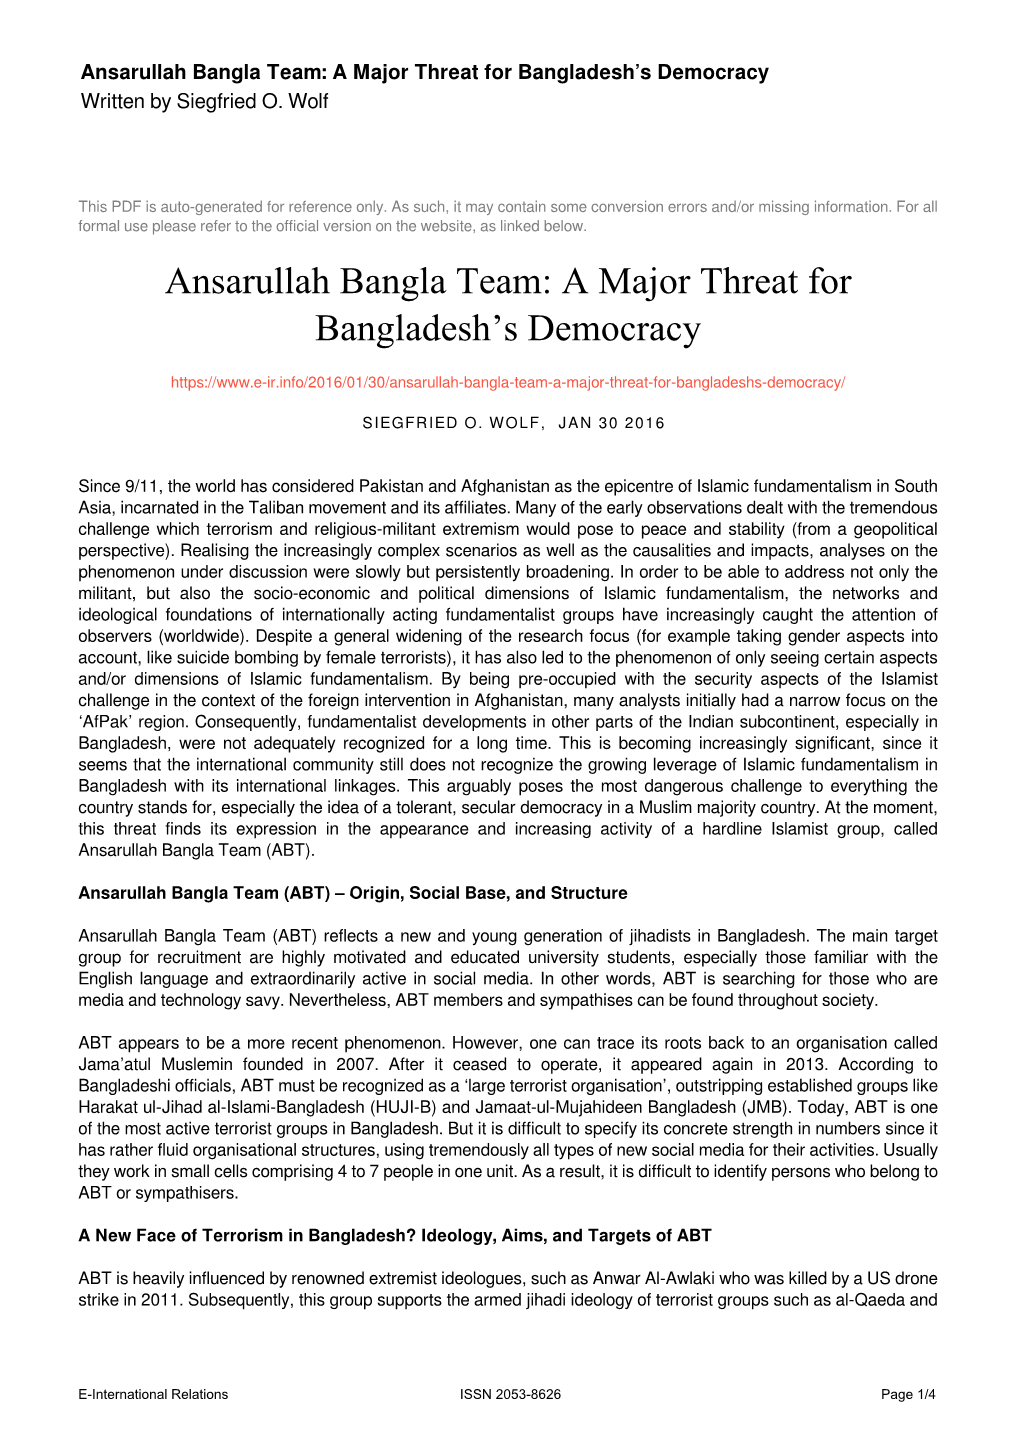 Ansarullah Bangla Team: a Major Threat for Bangladesh’S Democracy Written by Siegfried O